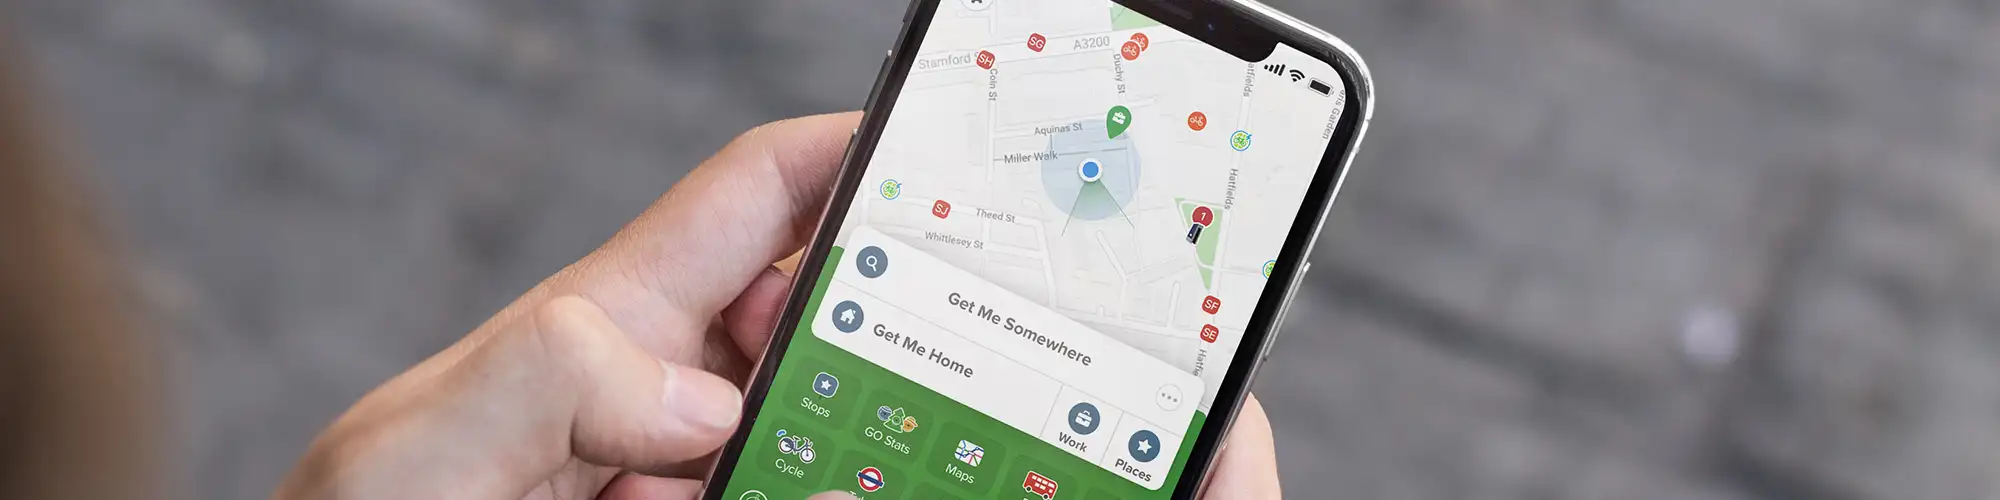 Citymapper App - The Ultimate Transport App for Travellers